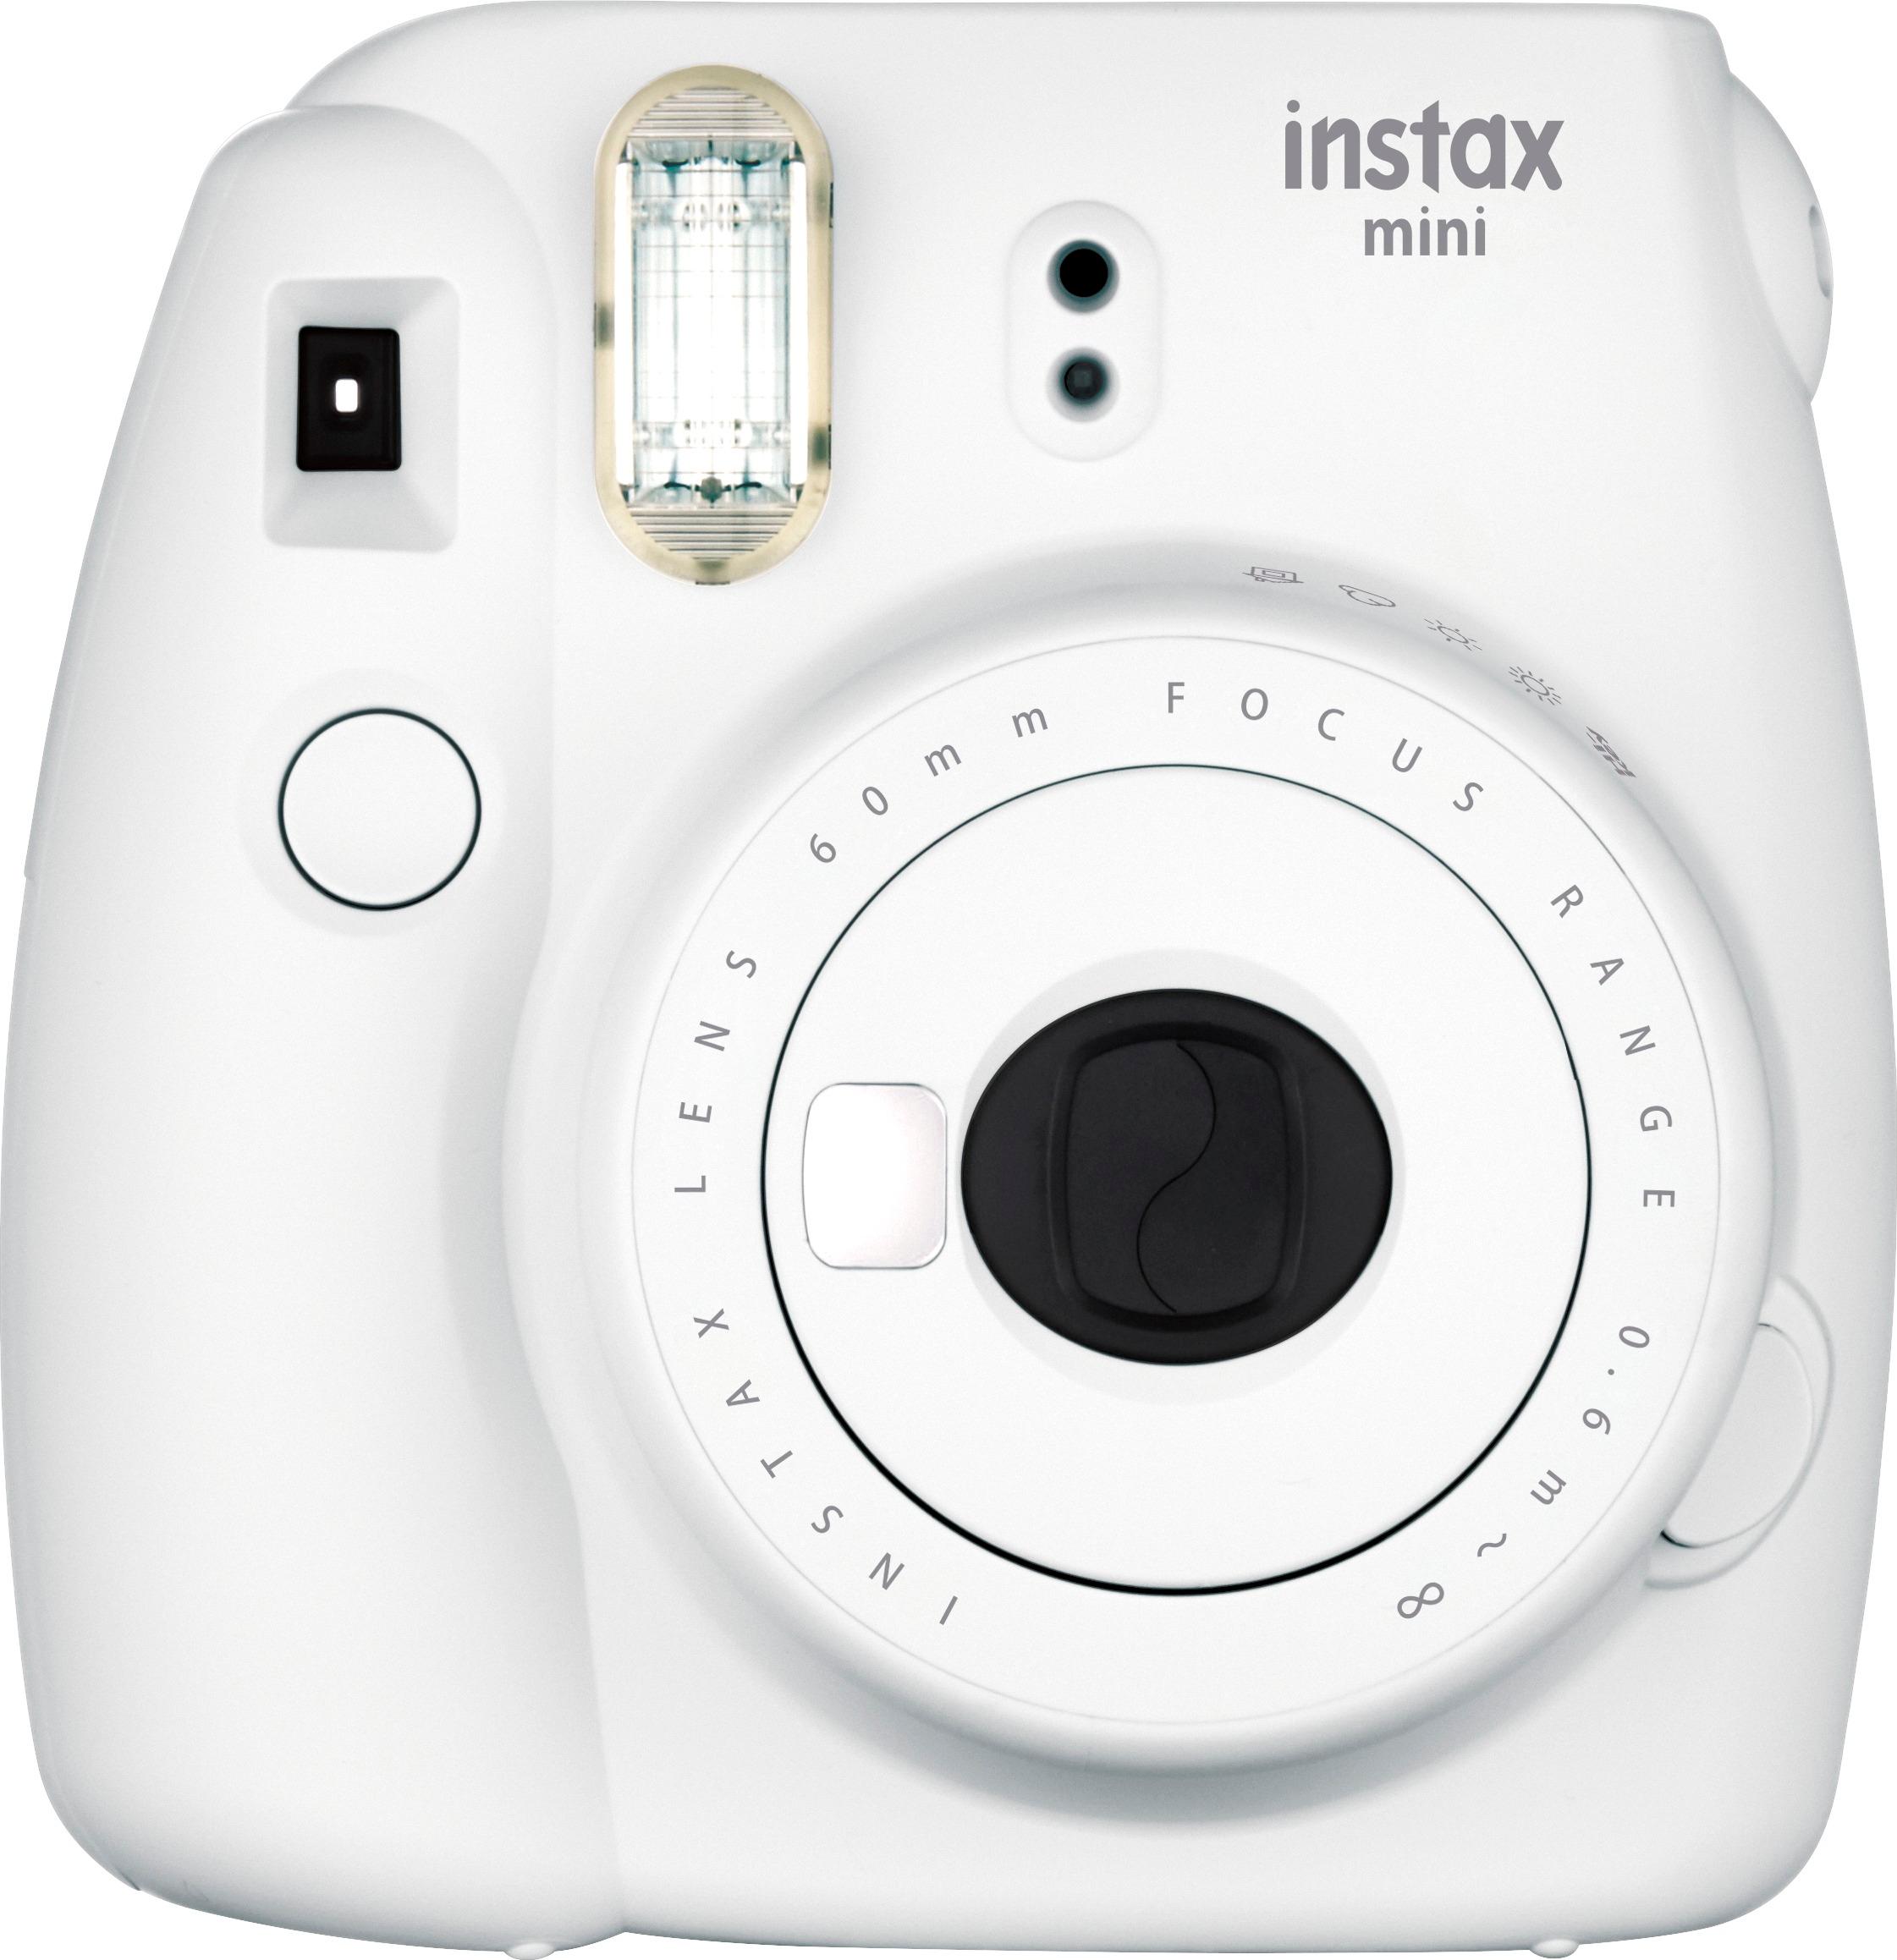 UPC 074101033113 product image for Fujifilm - instax mini 9 Instant Film Camera - Smokey White | upcitemdb.com